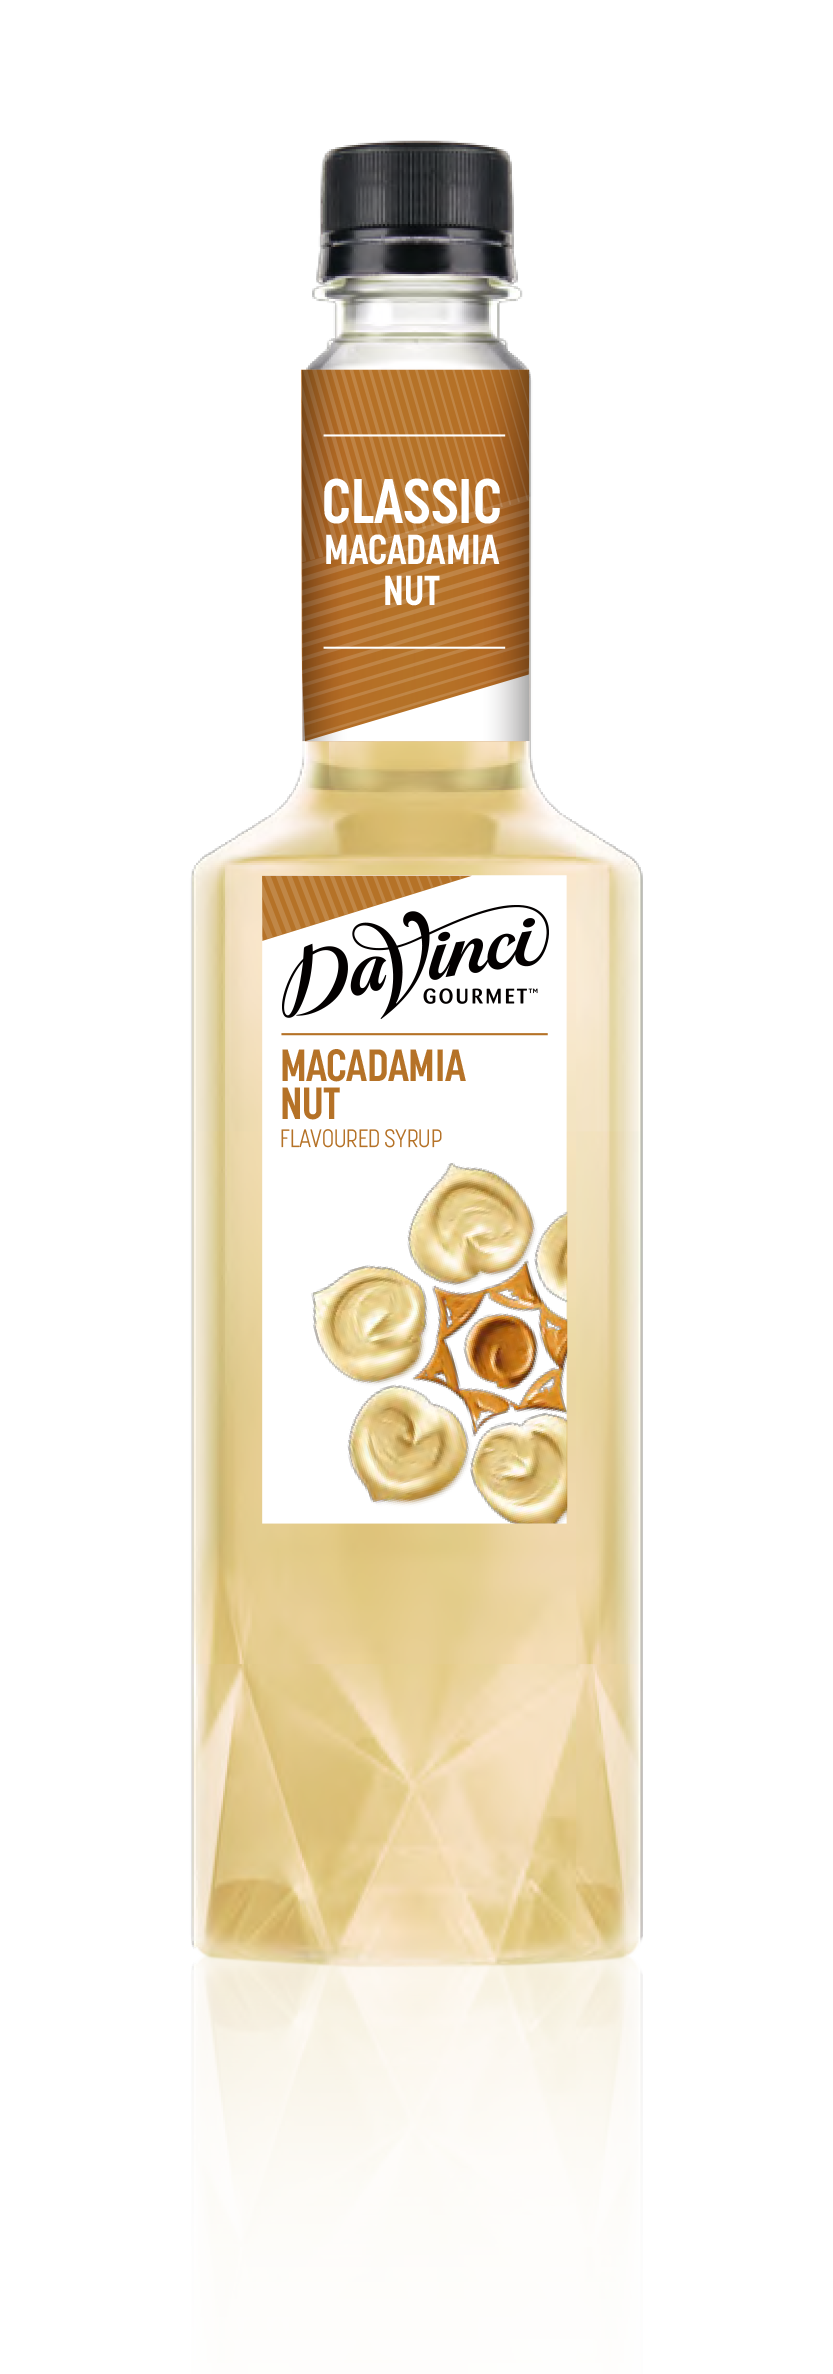 DaVinci Gourmet - Macadamia Nut